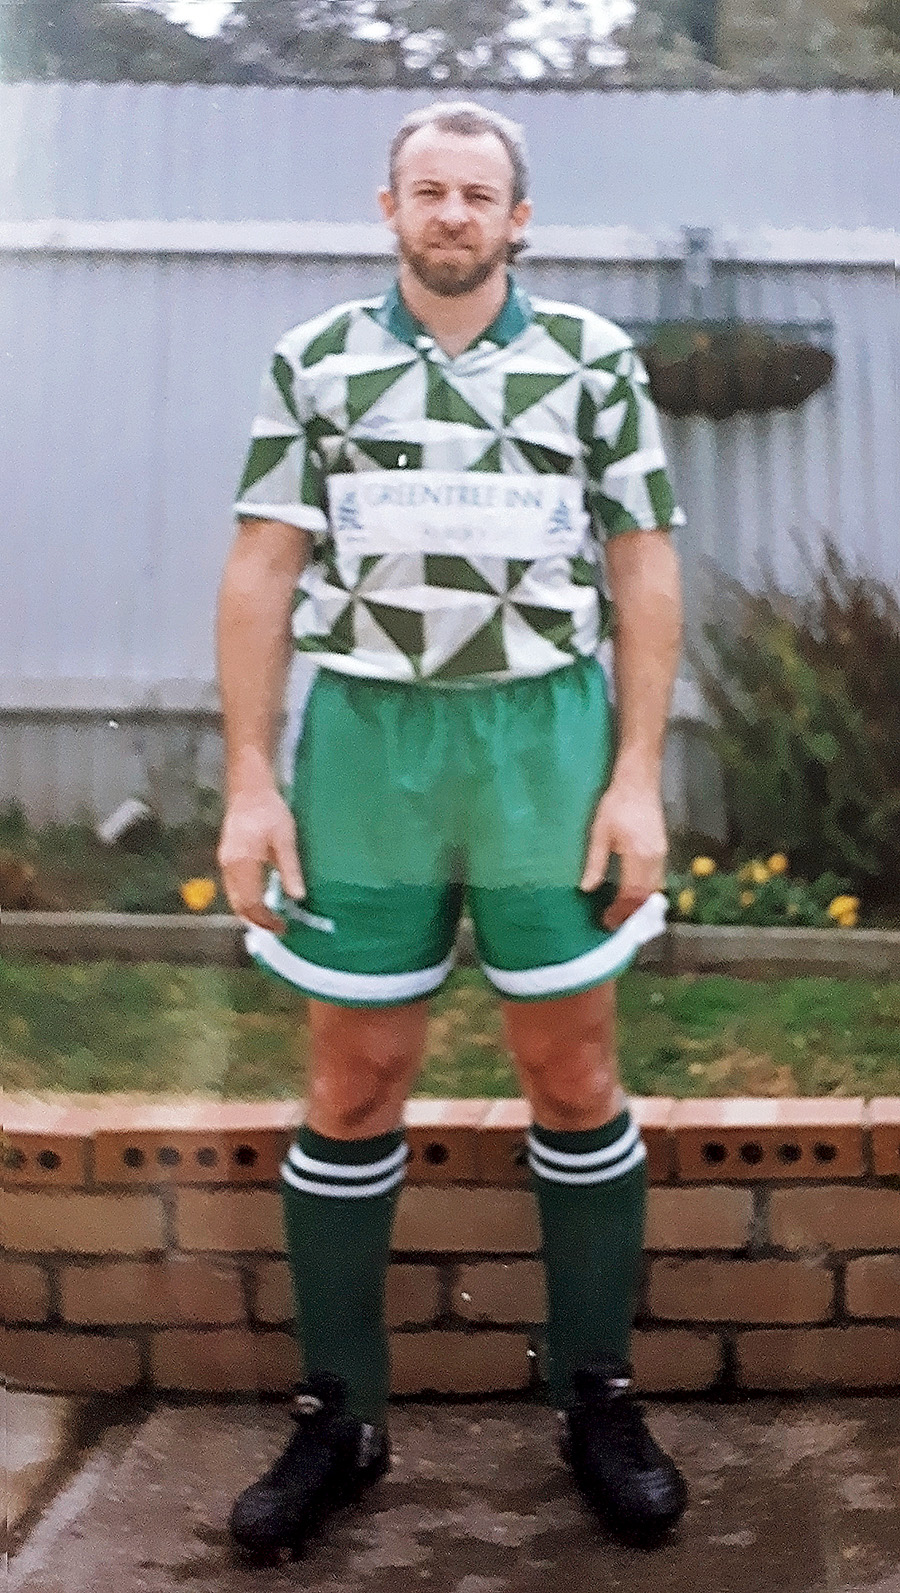 Leigh Christian,
Albury United Soccer Club, Life Member